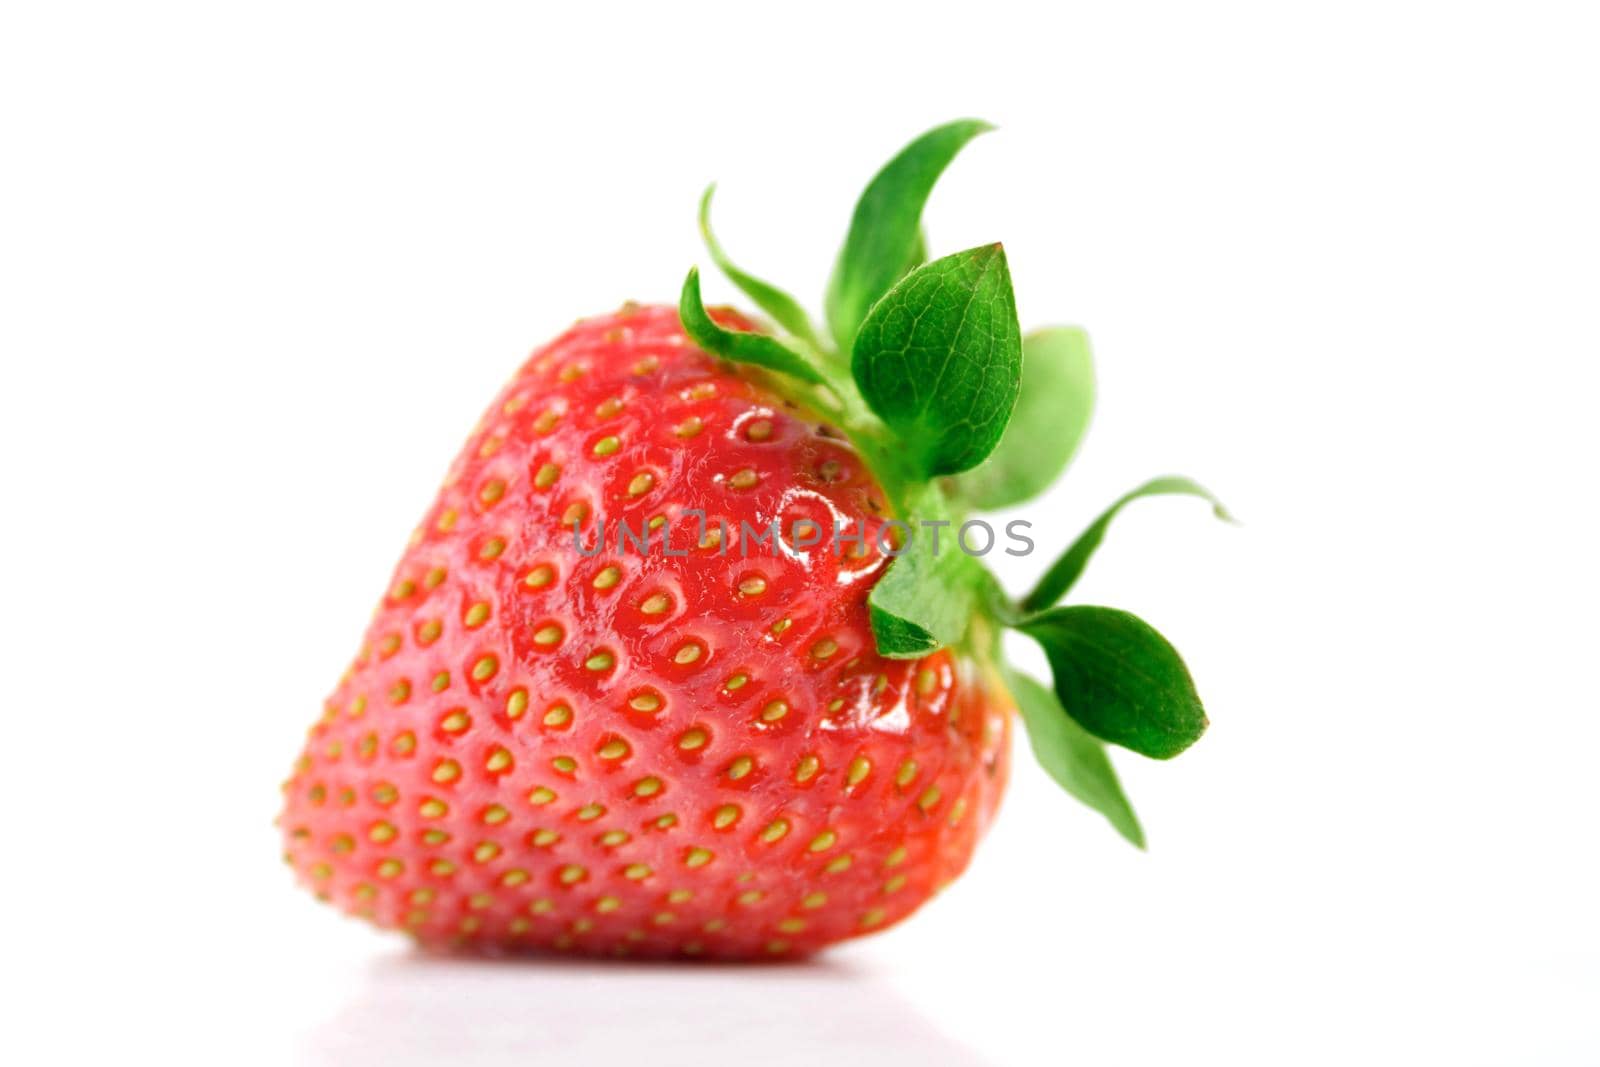 Strawberries by moodboard